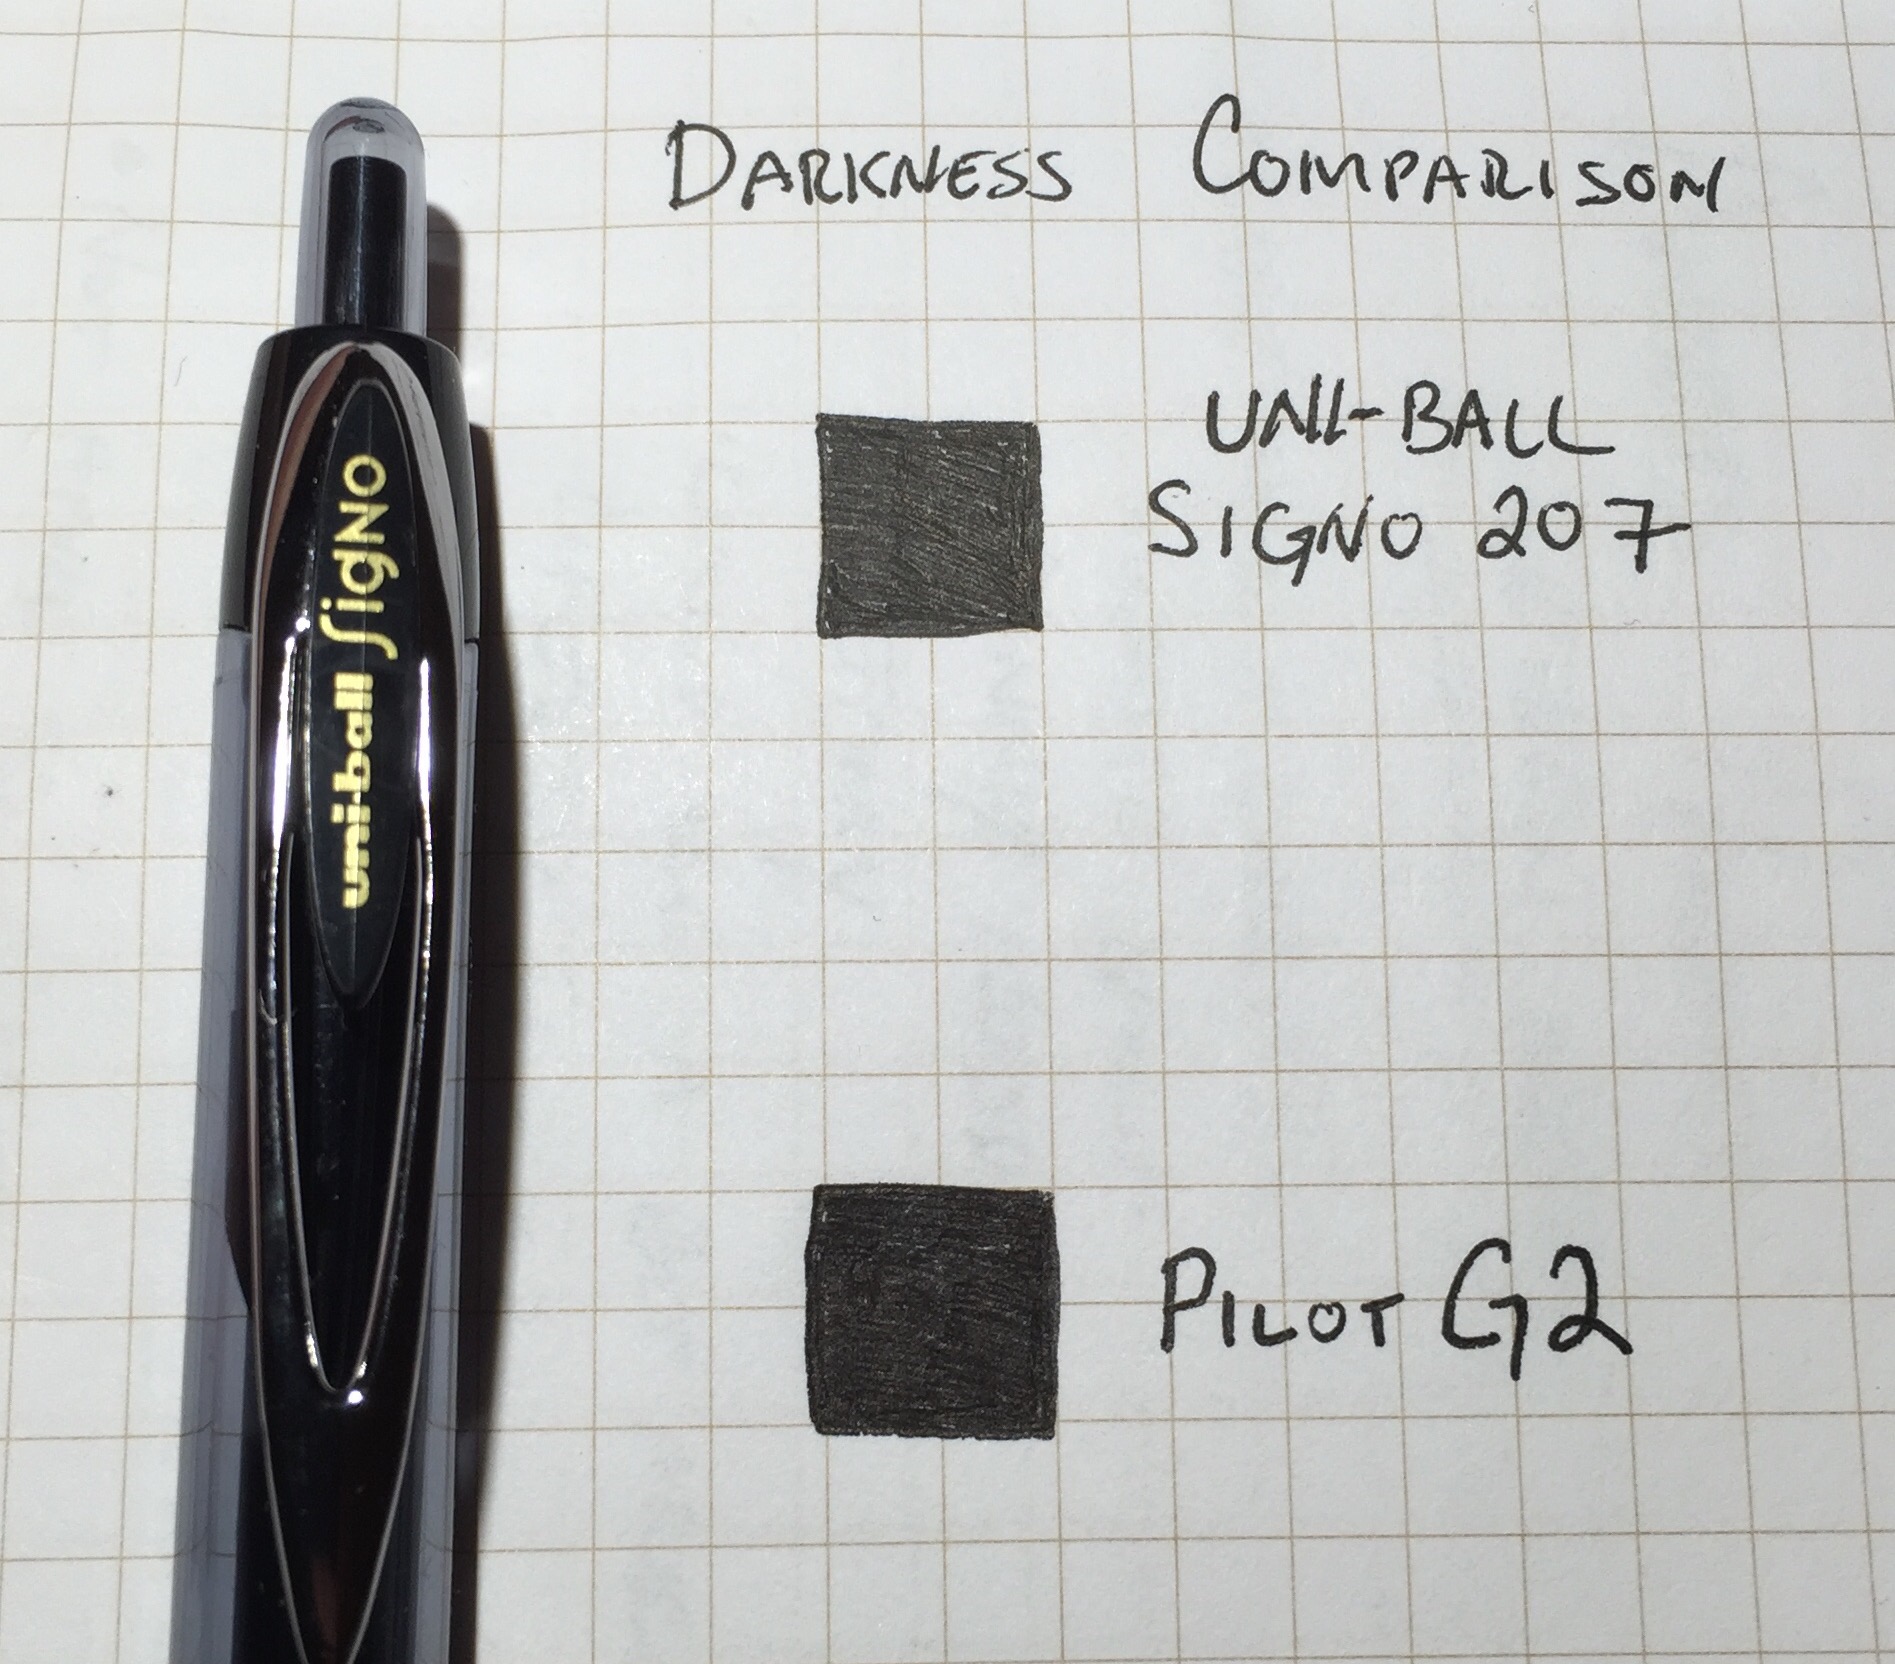 uniball 207 Retractable Gel Pens, Ultra Micro Point, 0.38mm, Blue